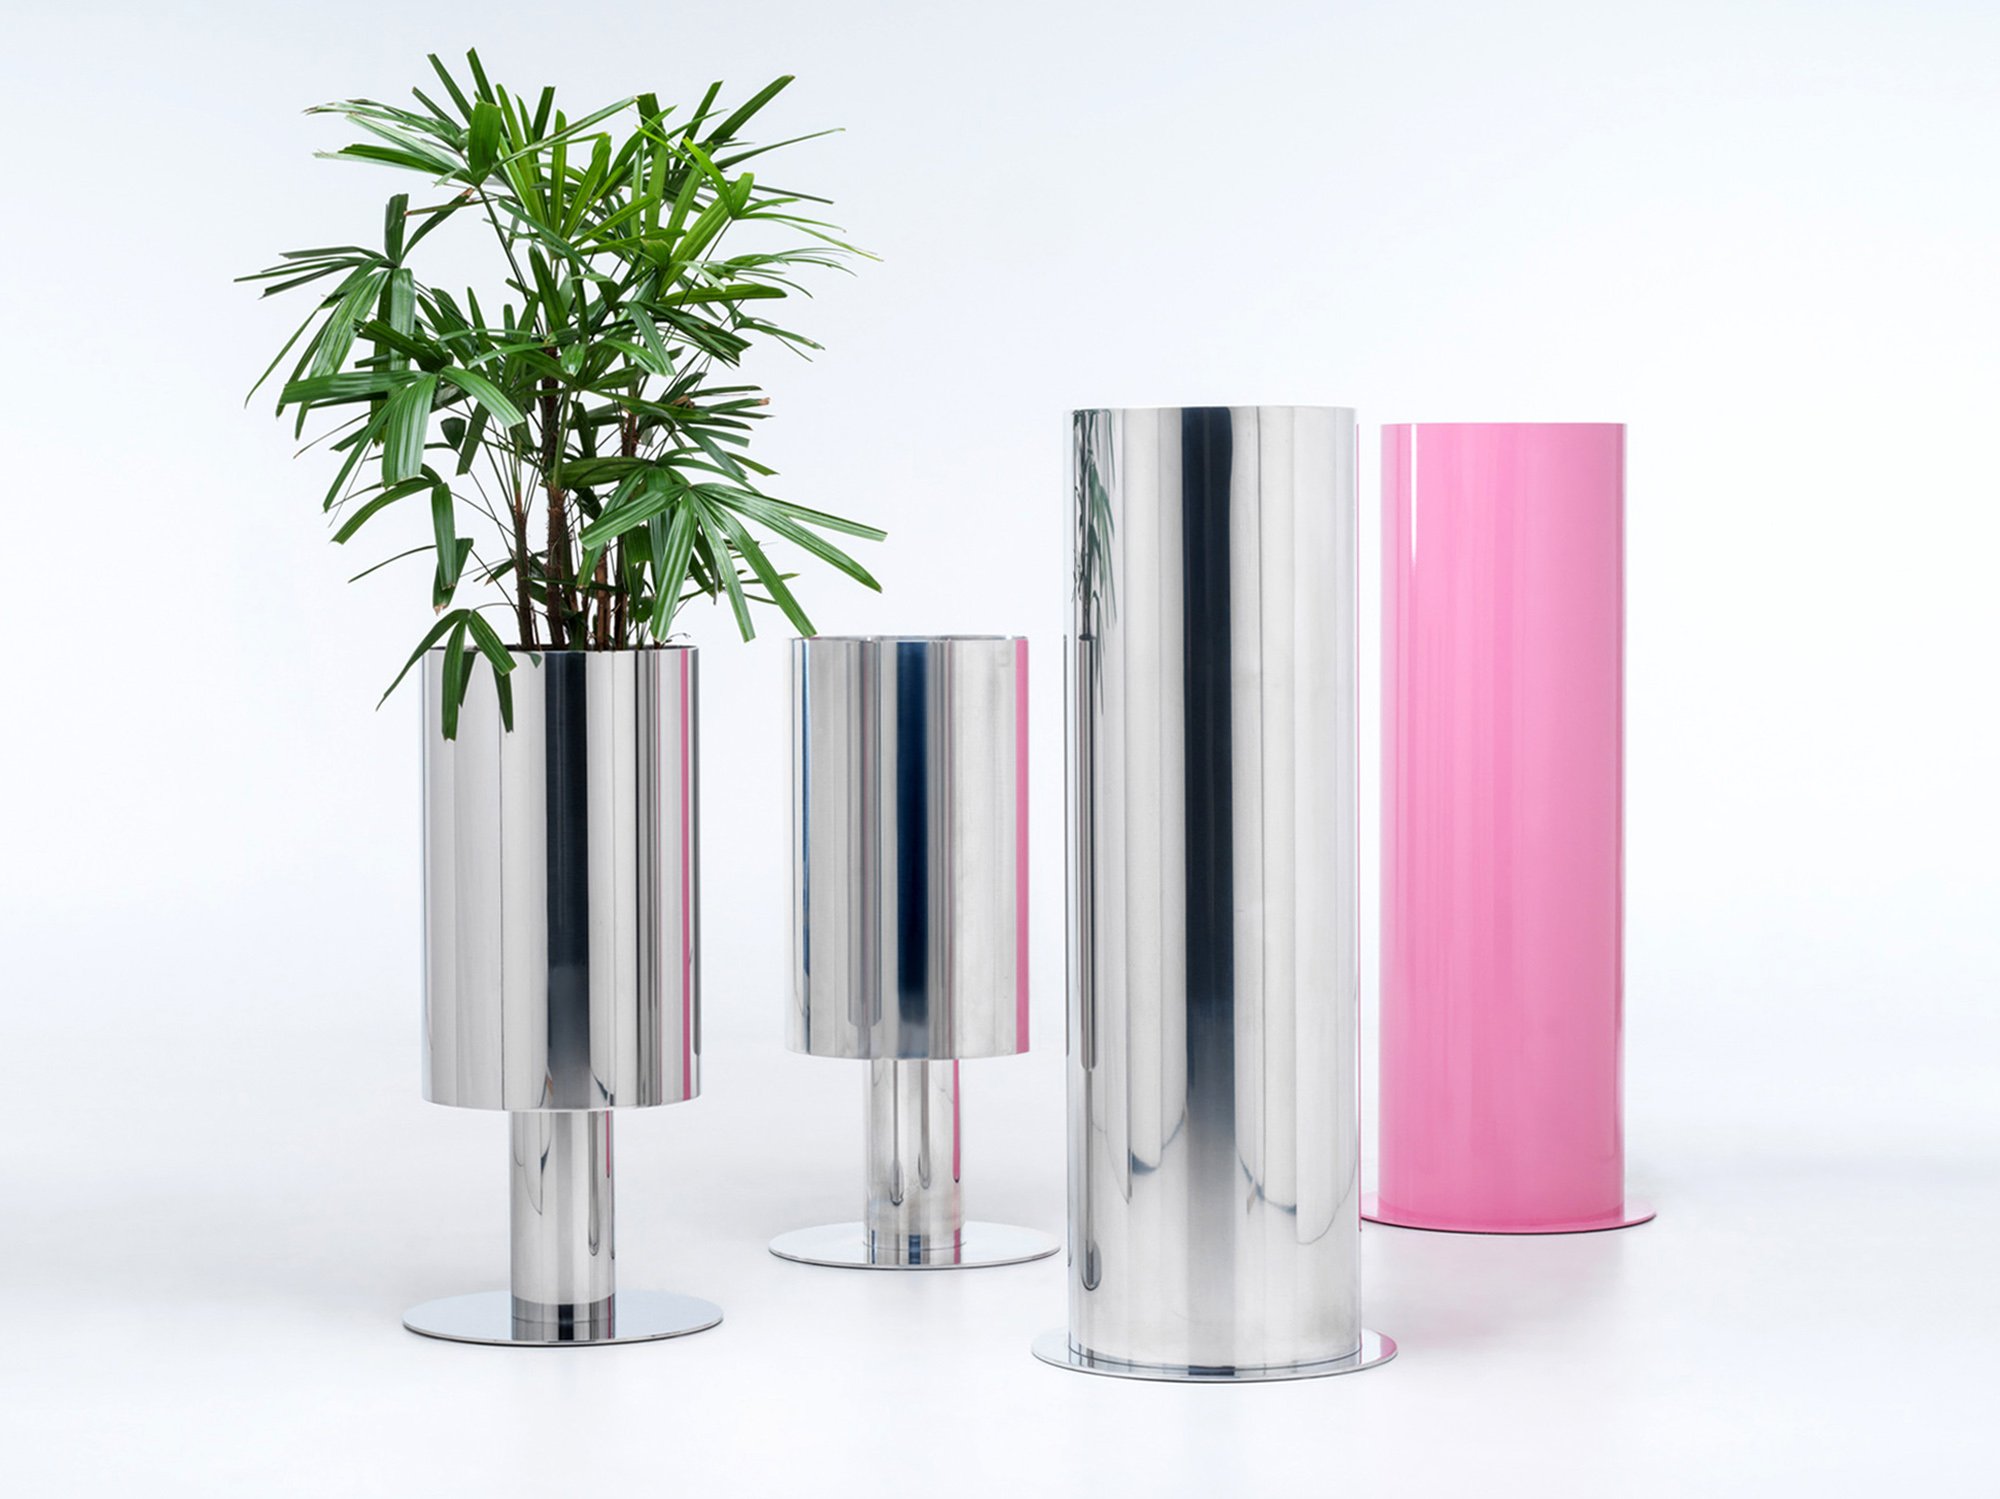 b2-b4-planters-pink-mirror-polished-stainless-steel-plants.jpg